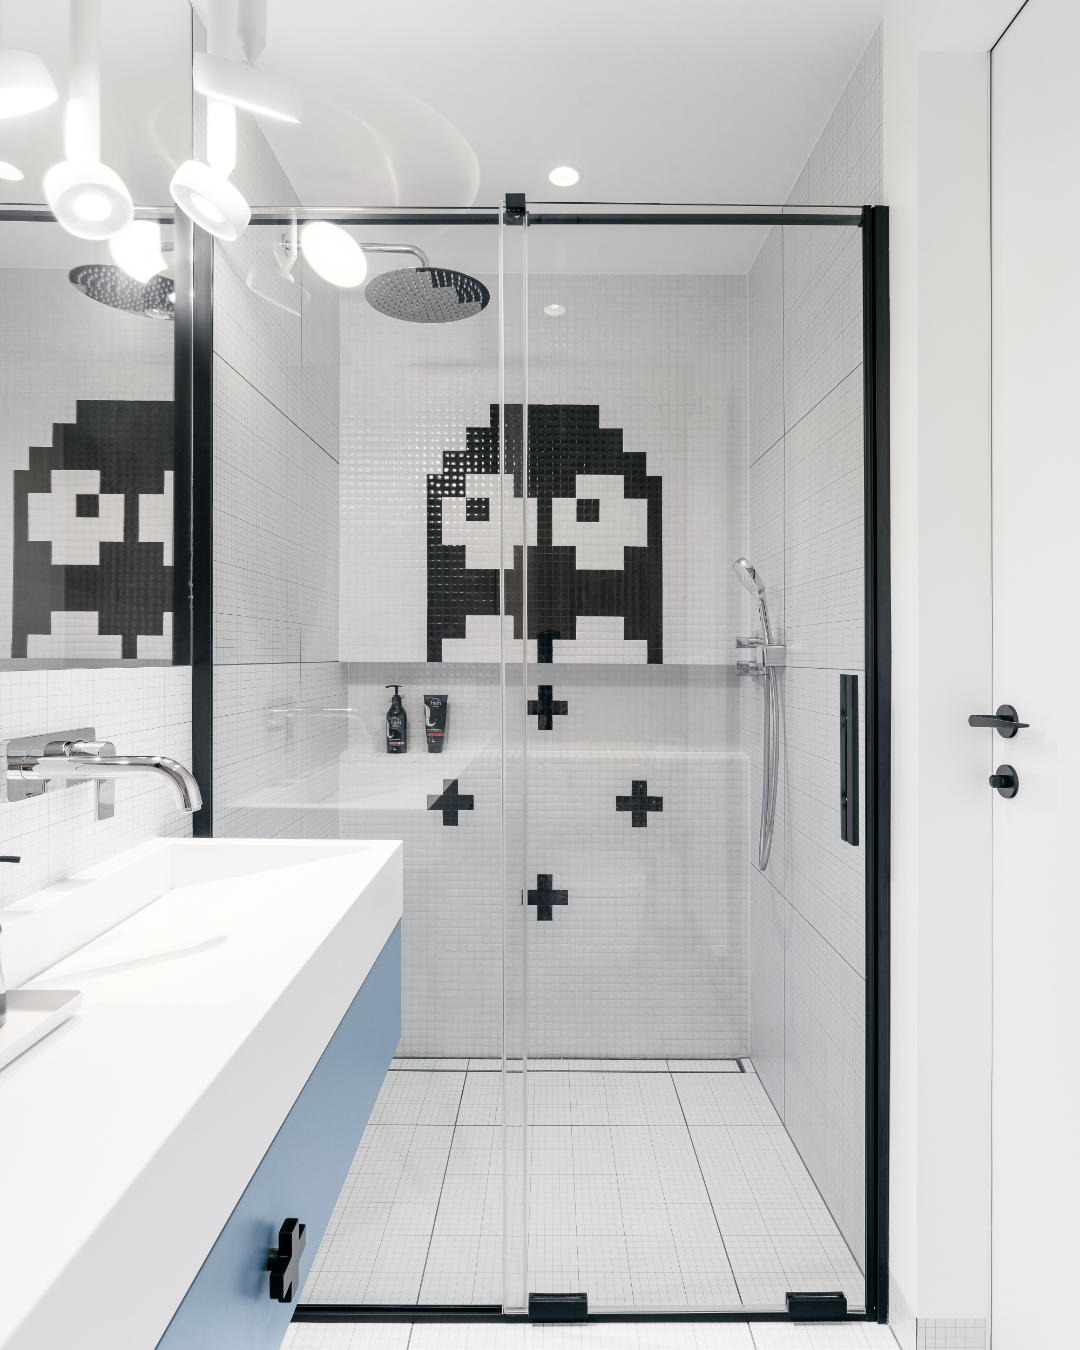 Bathroom mosaic - pixelart - pixel art - gaming - prysznic - mozaika - Trufle Mozaiki -